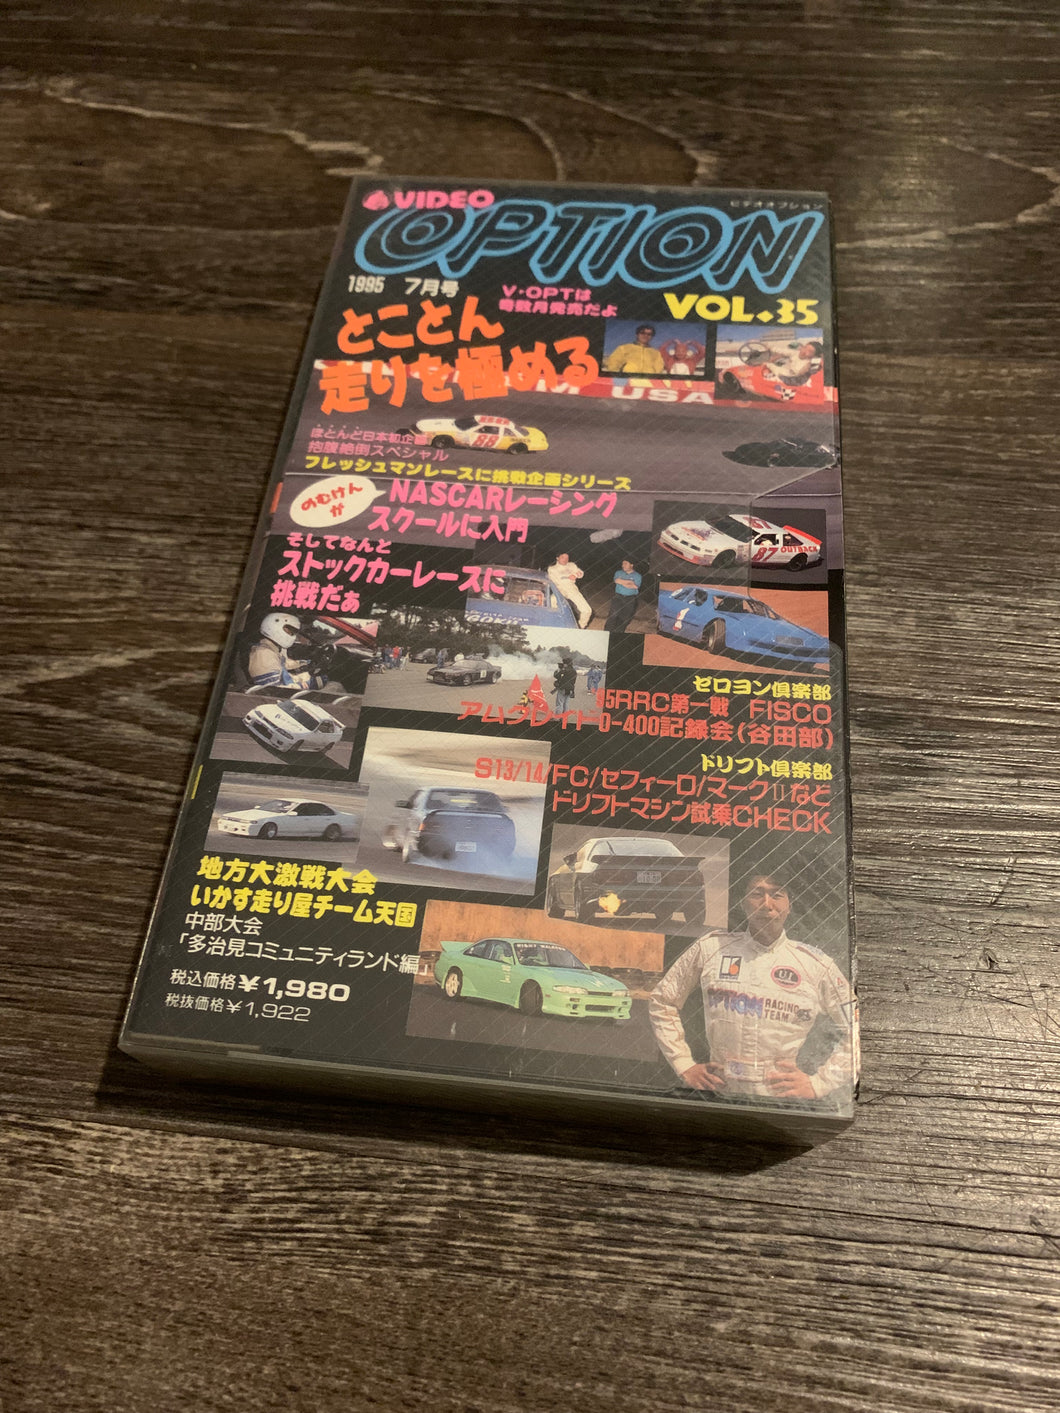 Option VHS Jul. 1995 Volume 35